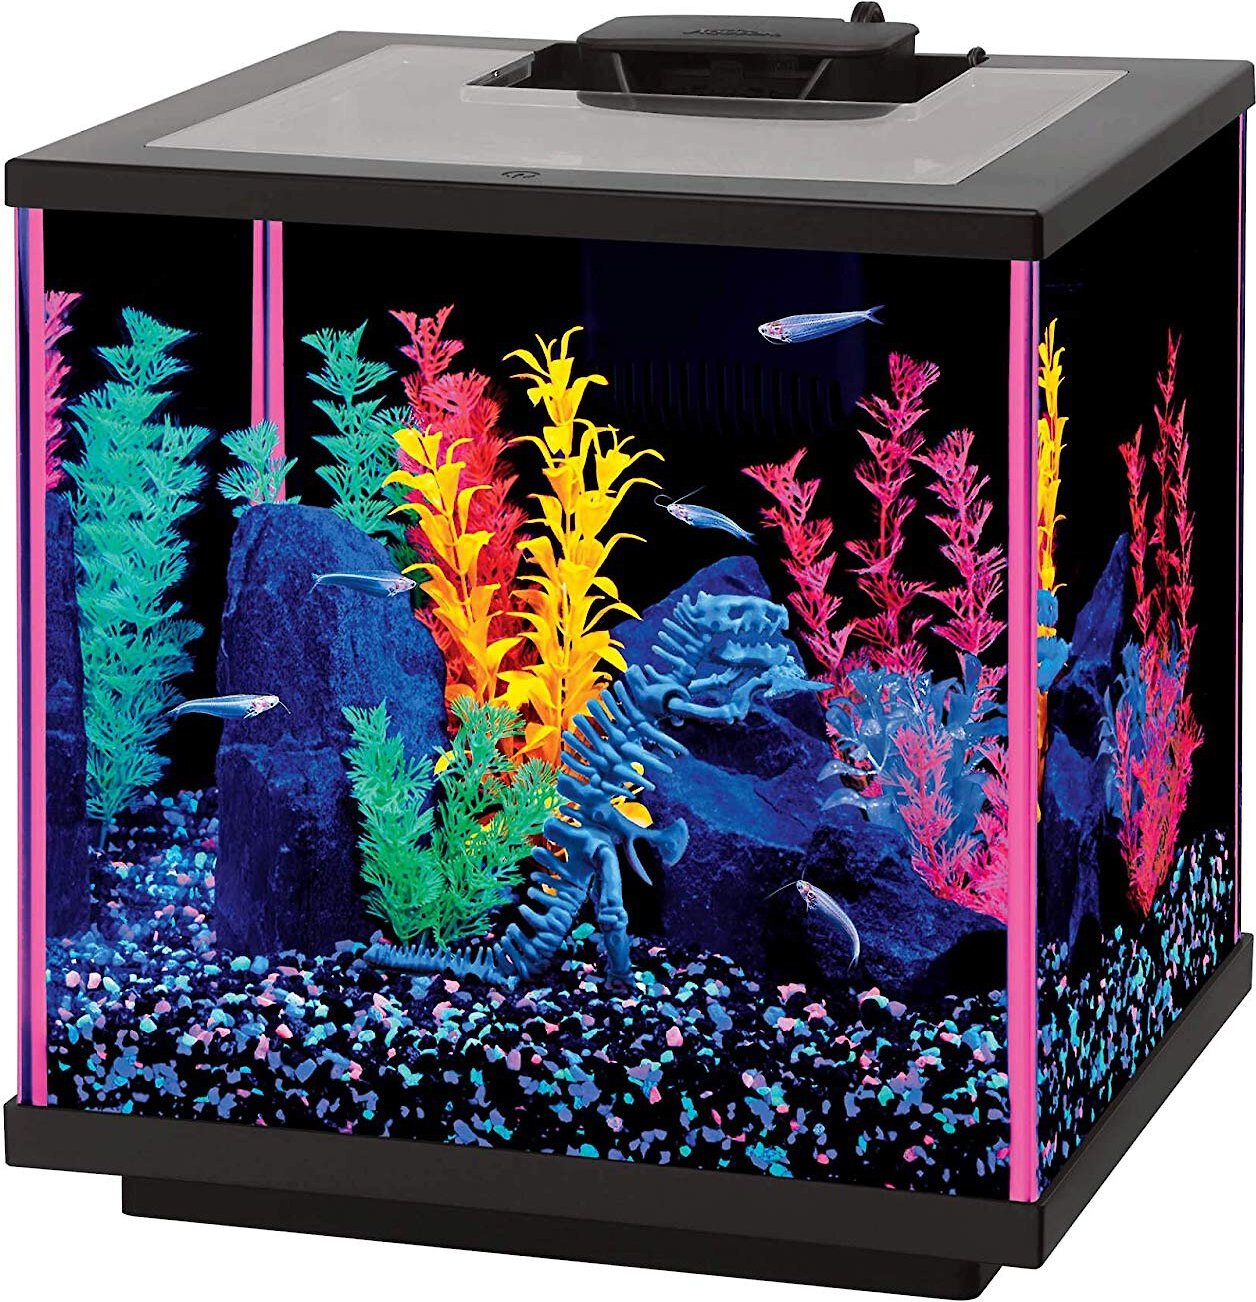 AQUEON LED NeoGlow Aquarium Starter Kit Pink 7 5 gal Chewy